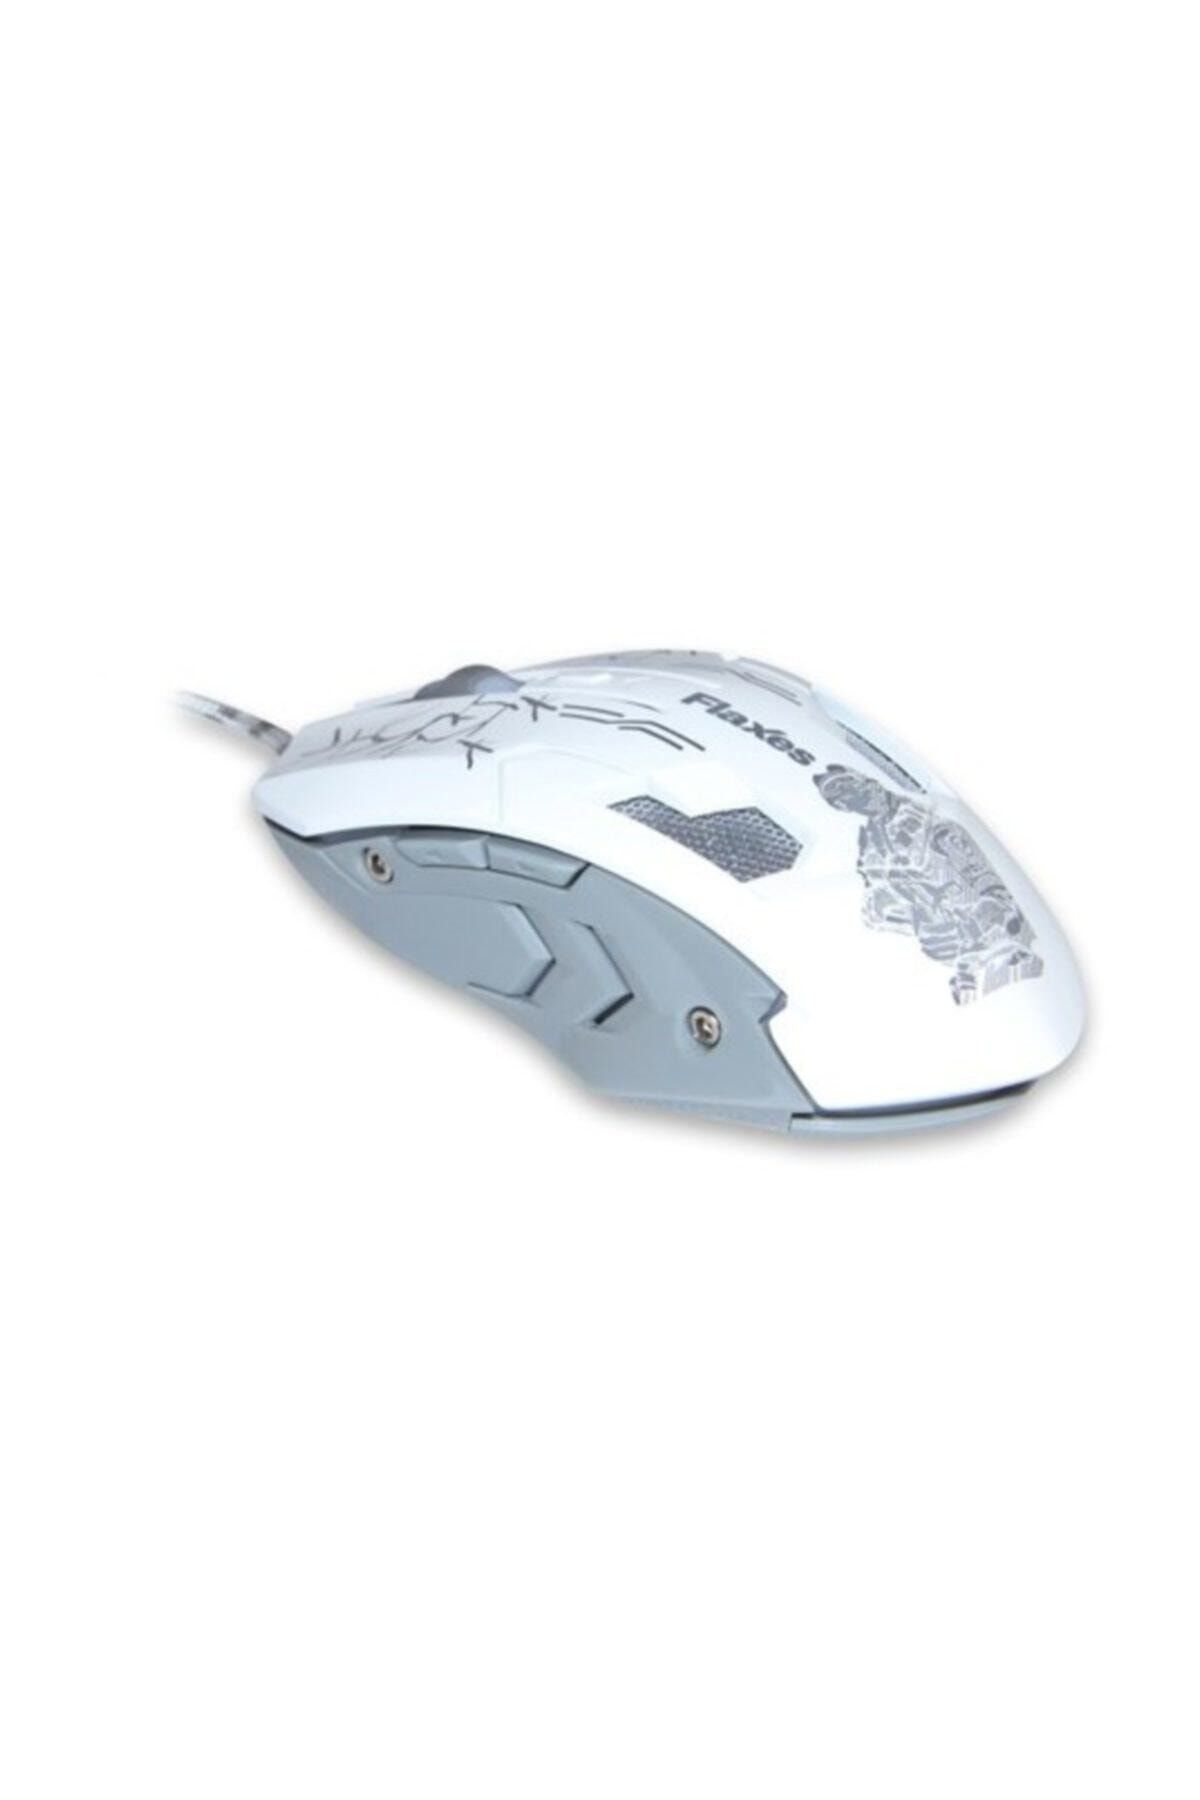 FLAXES Flx-950gmb 3200dpı Oyuncu Beyaz Mouse + Mousepad